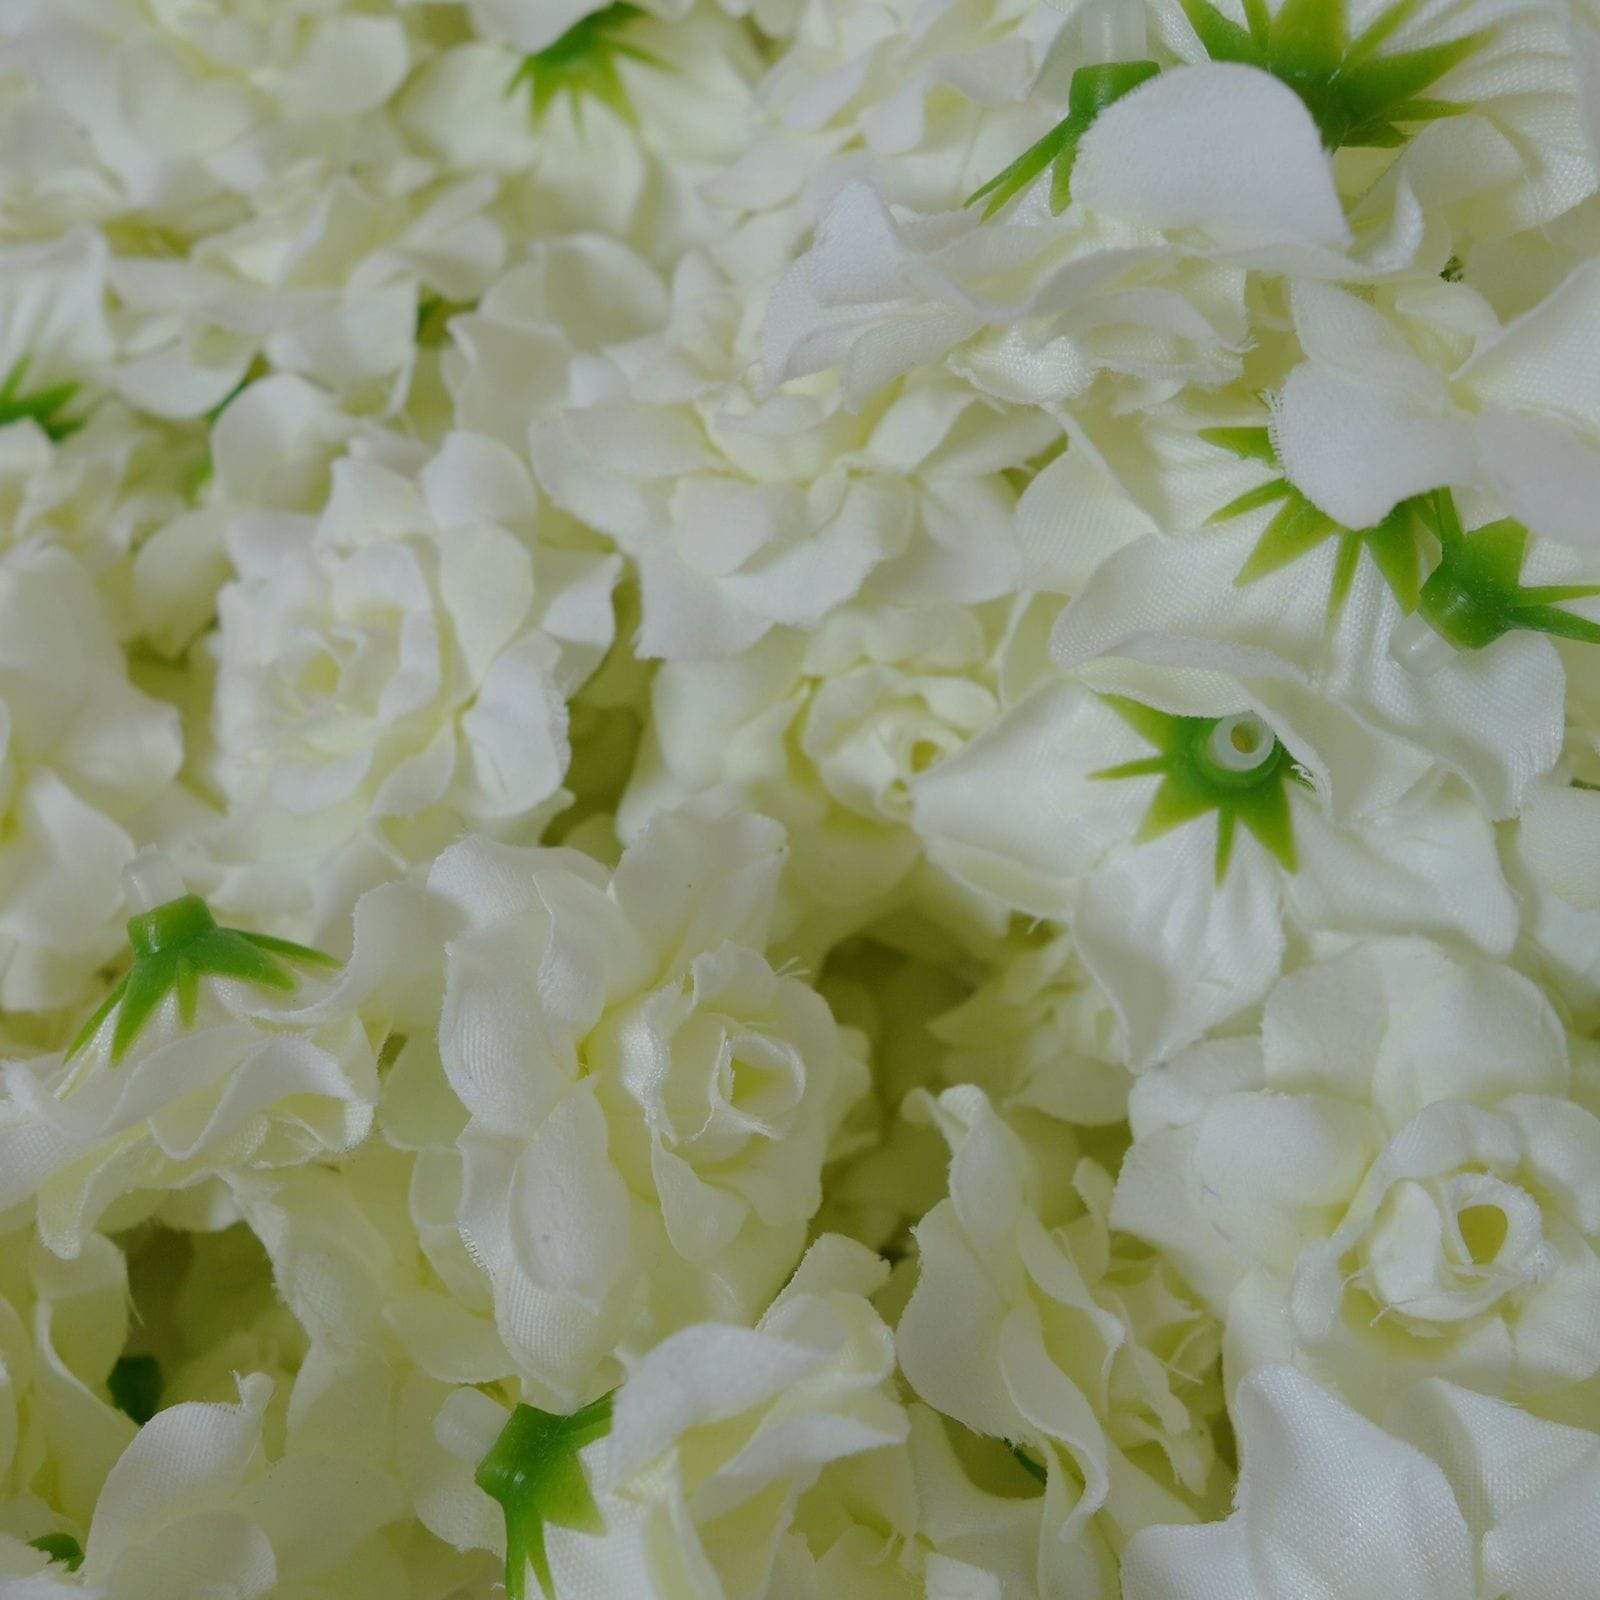 24 Bulk Artificial White Cream Roses Fabric Flower Heads for Hair Clips Head Bands